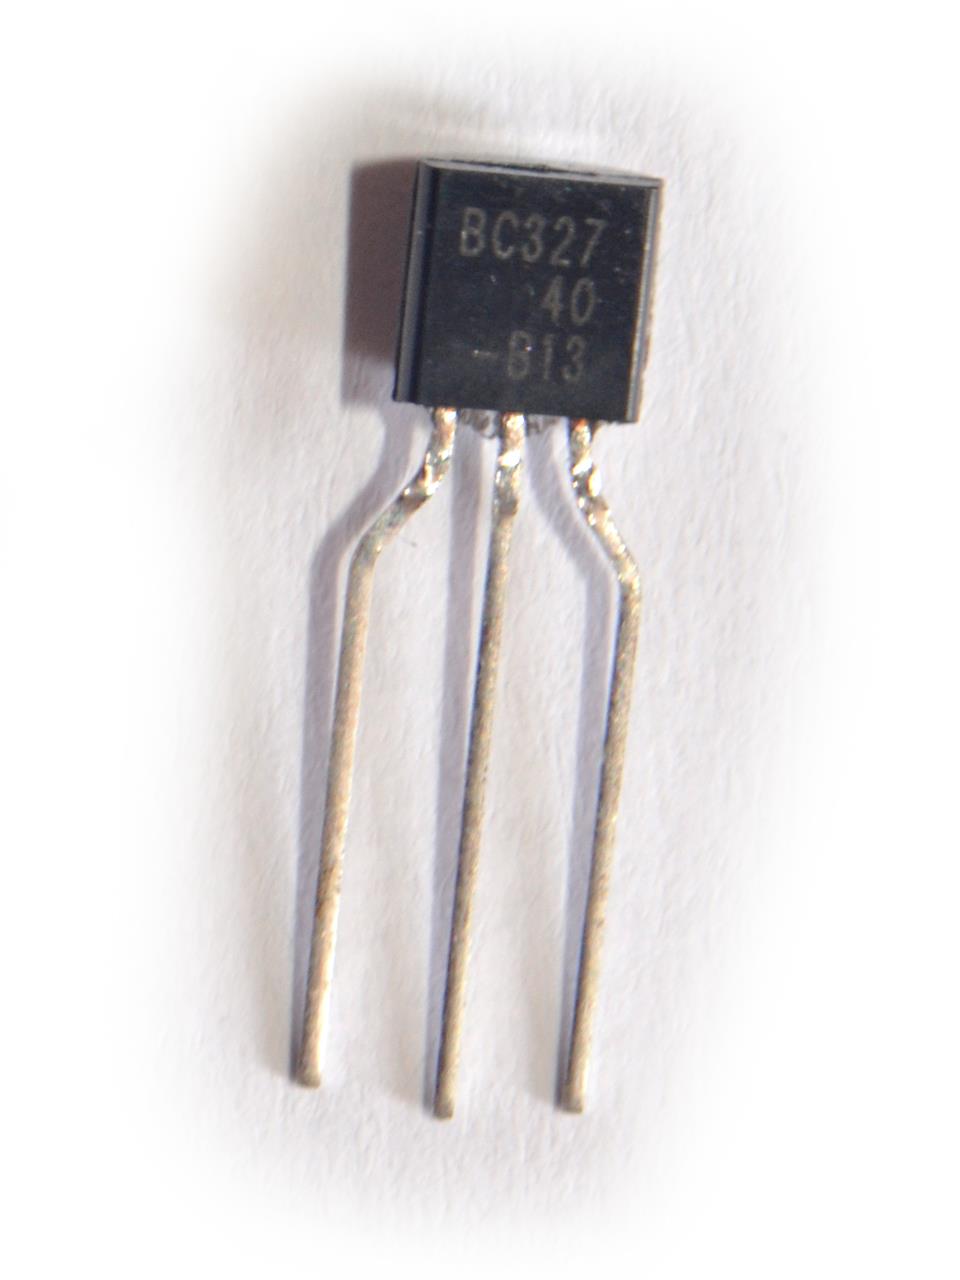 Transistores - Transistor BC327